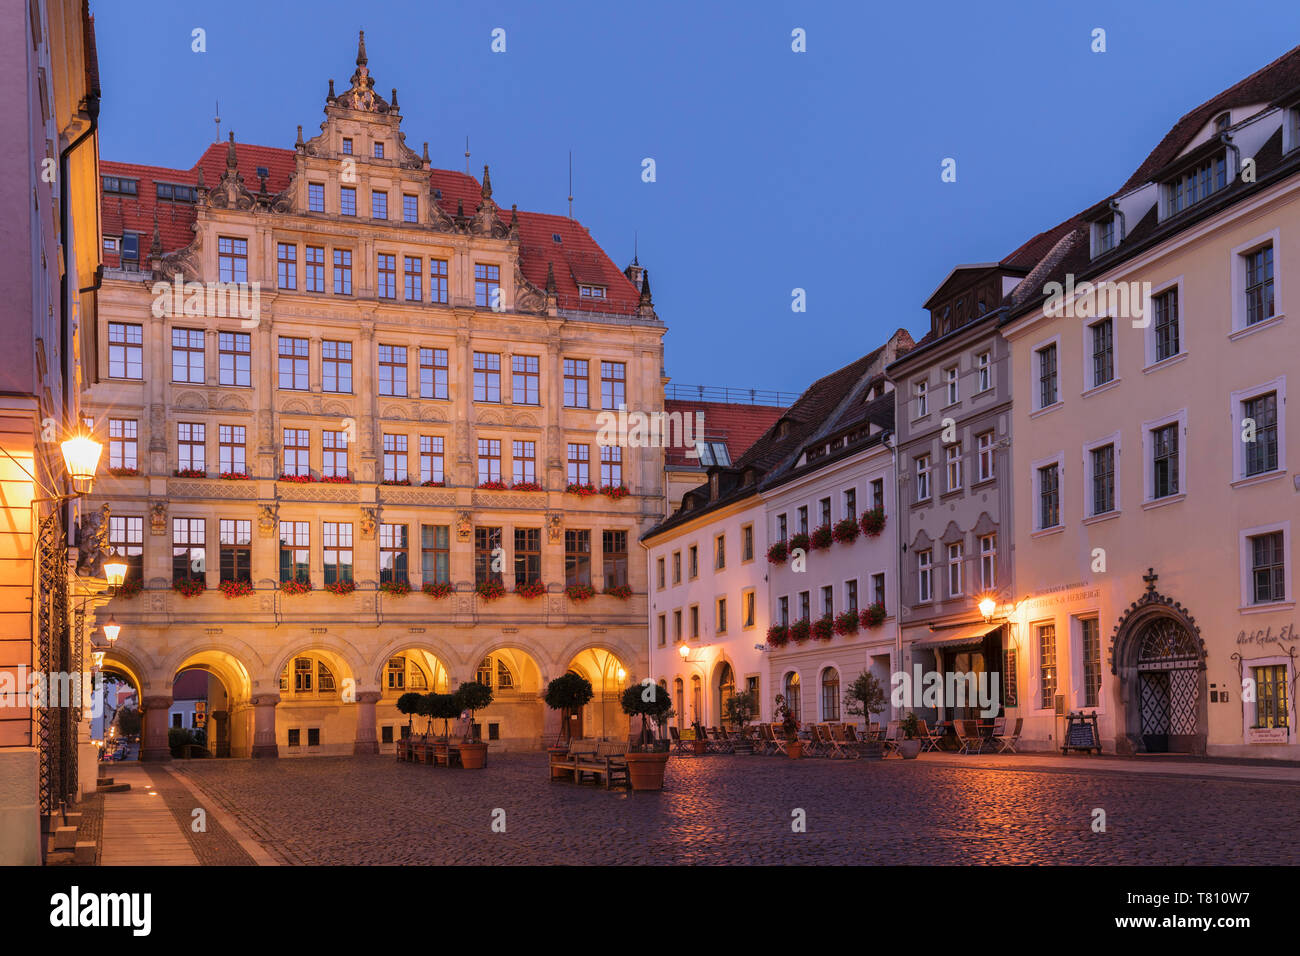 New town hall at Untermarkt Square, Goerlitz, Saxony, Germany, Europe Stock Photo